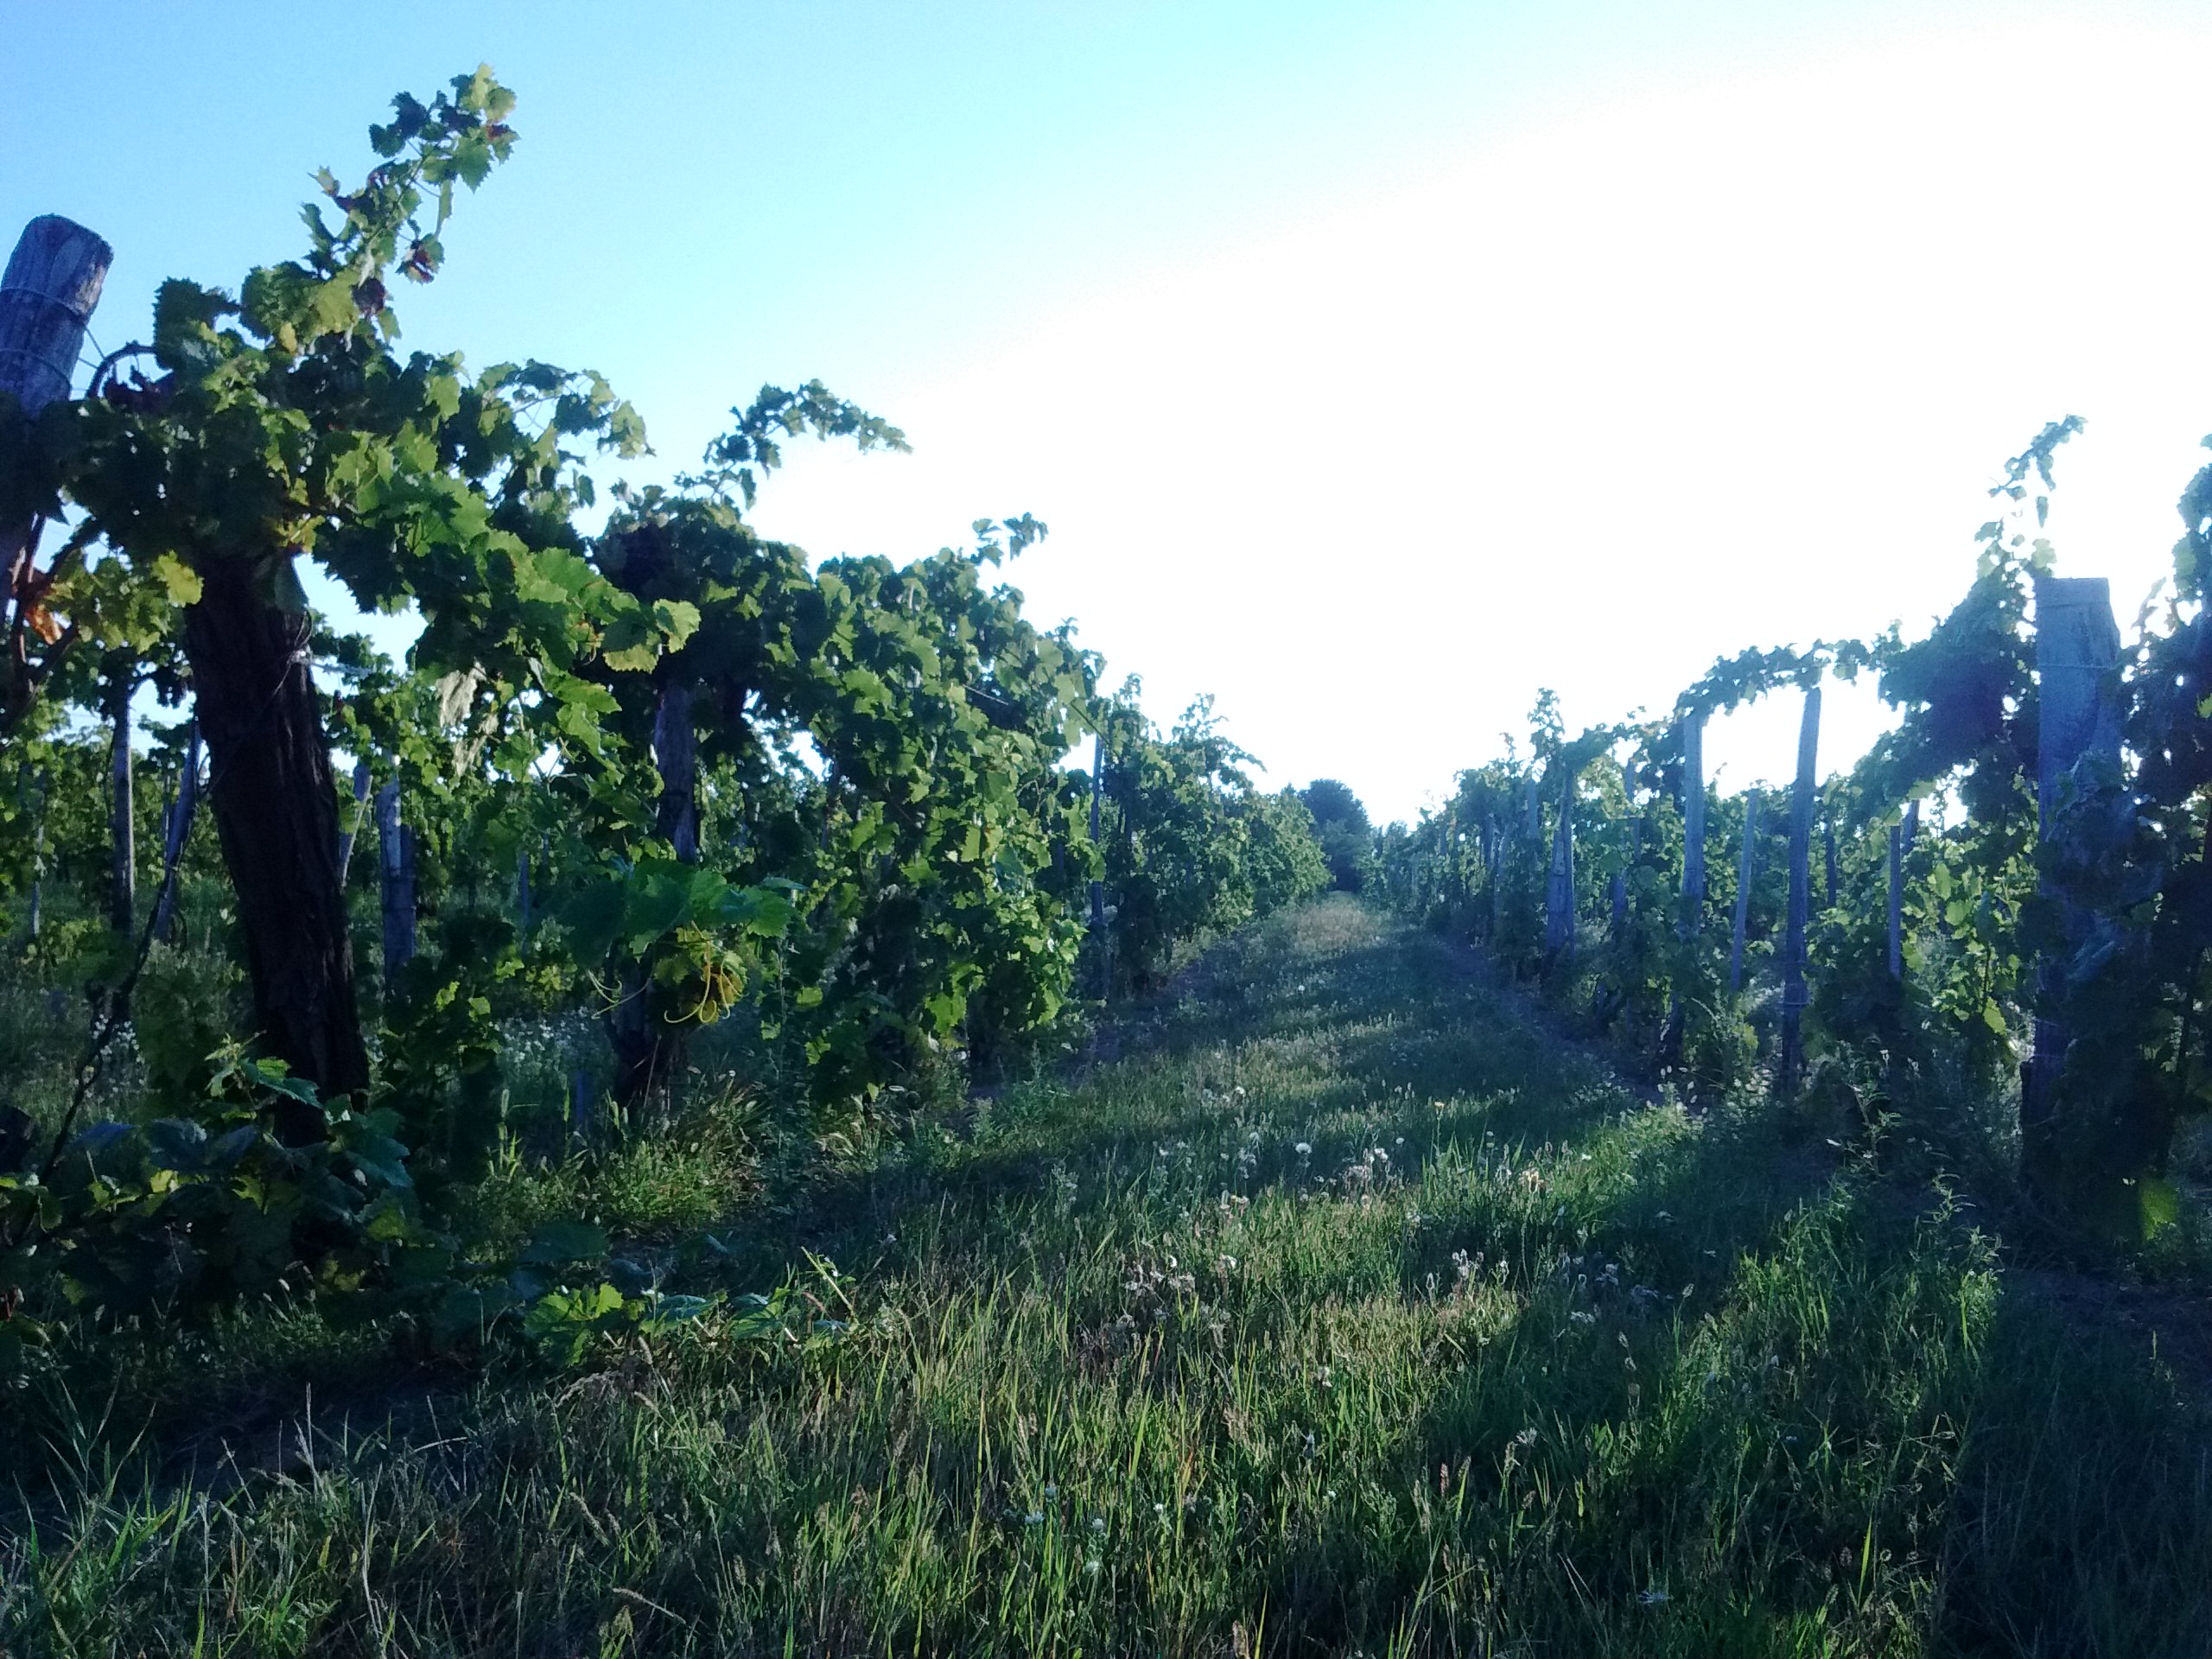 Vineyard in the morning sunlight.